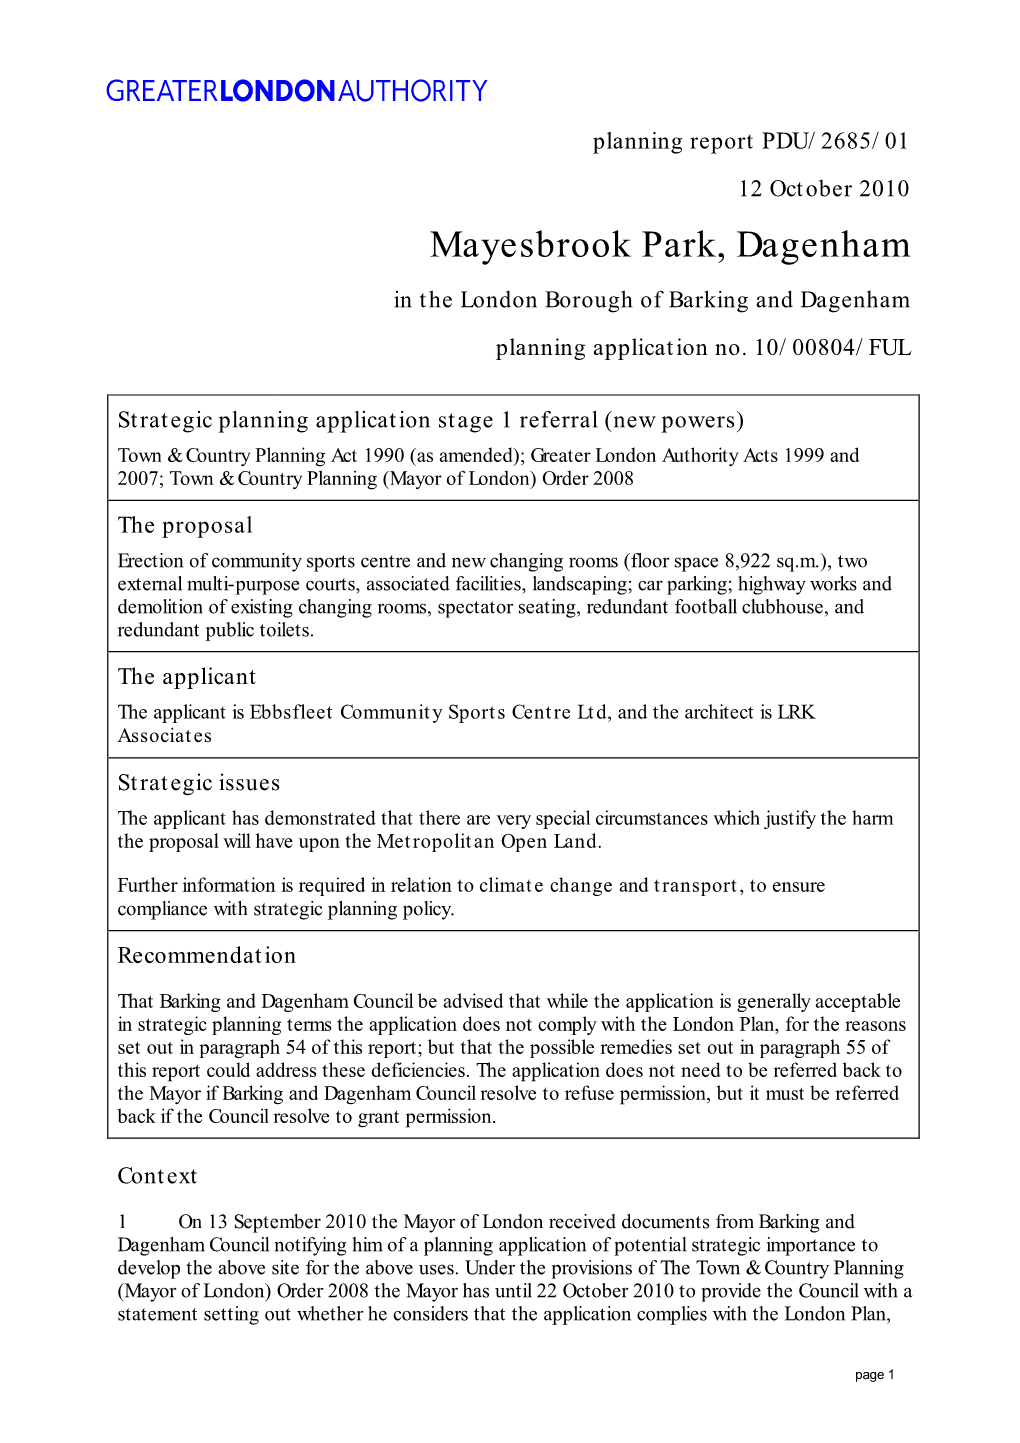 Mayesbrook Park, Dagenham